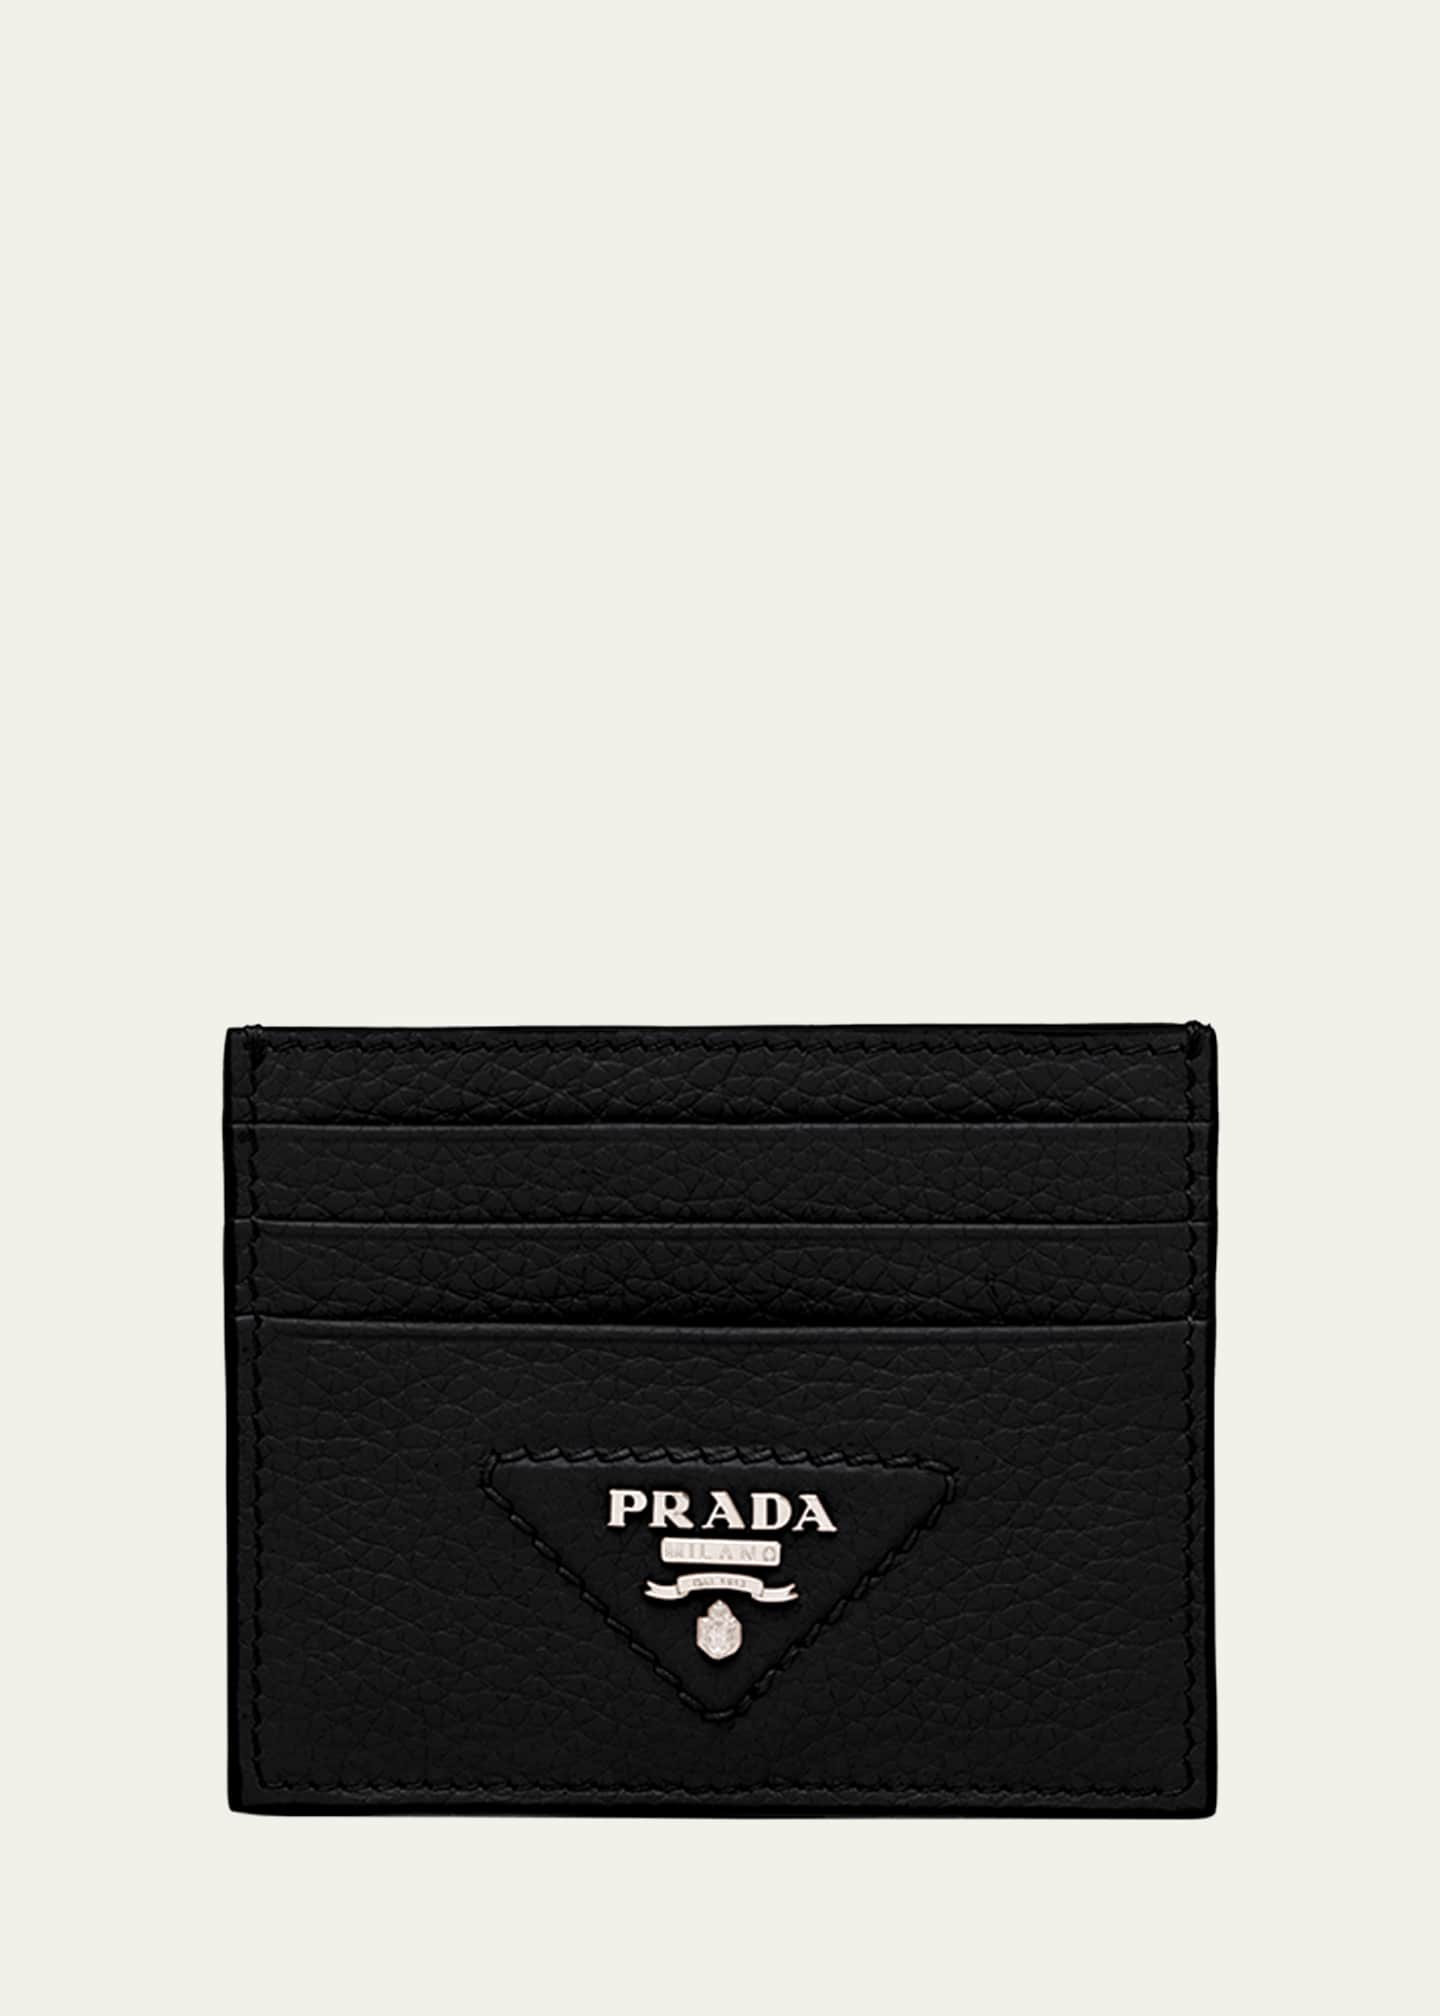 Prada Women's Leather Card Holder